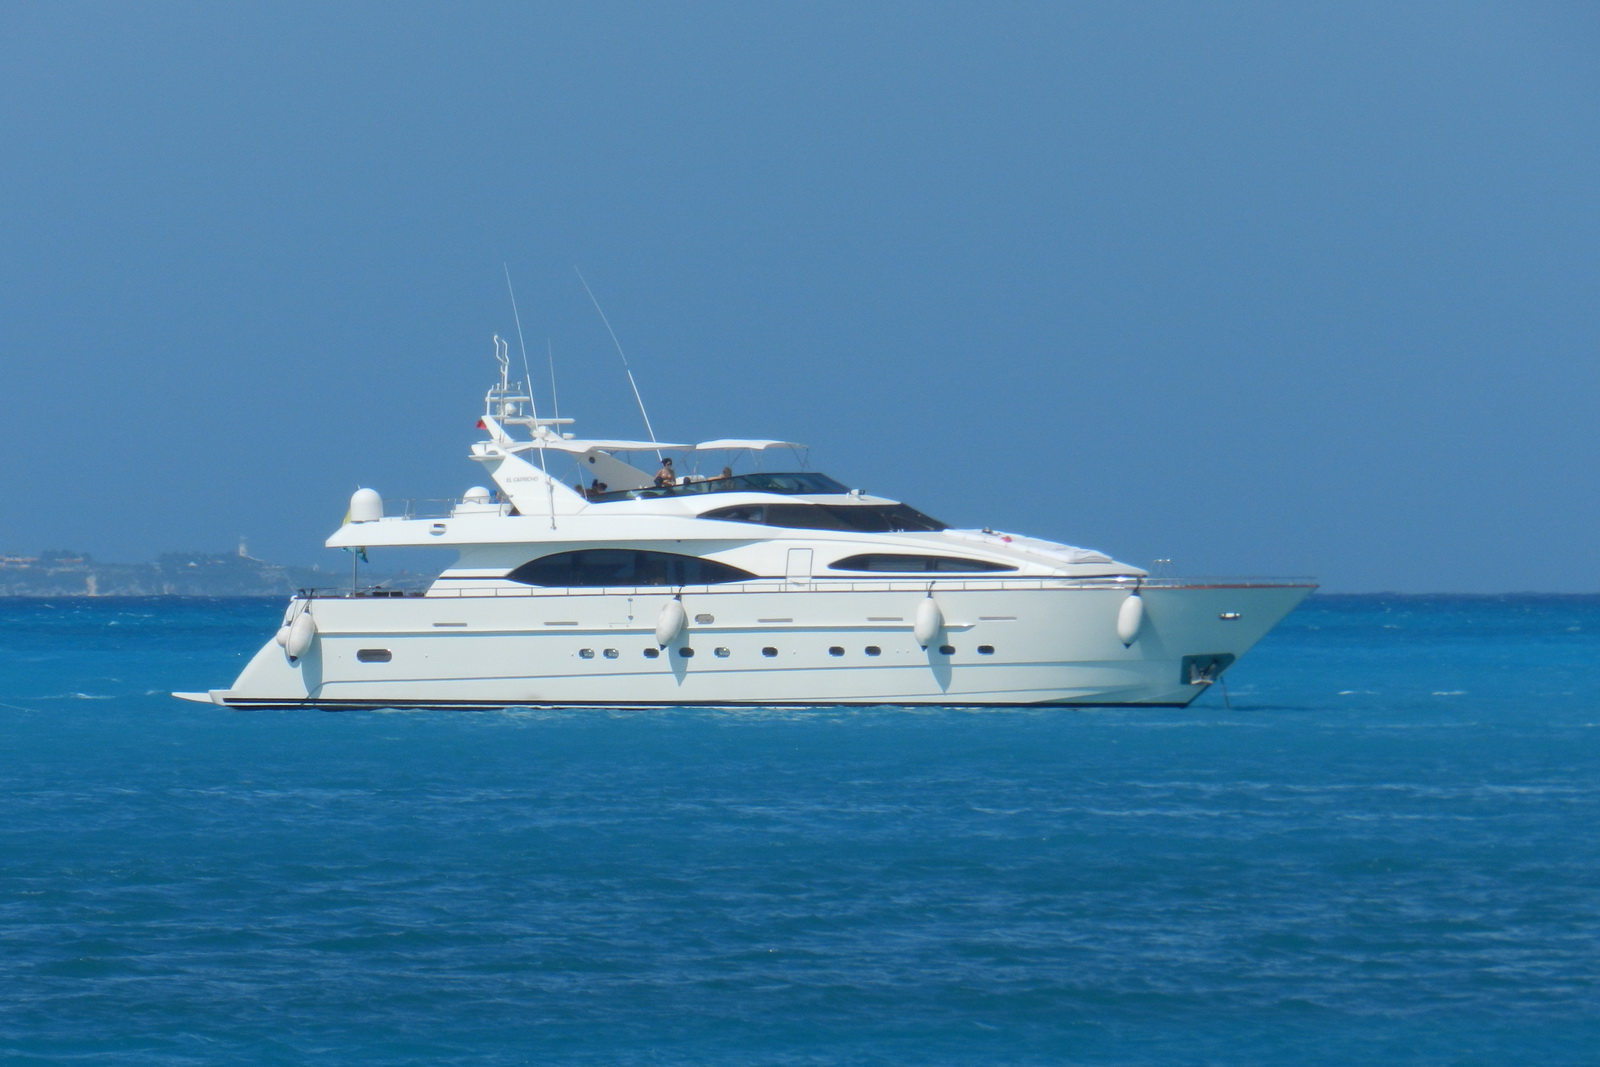 Serene Miami coastline with luxurious yachts sailing under the sunny sky.